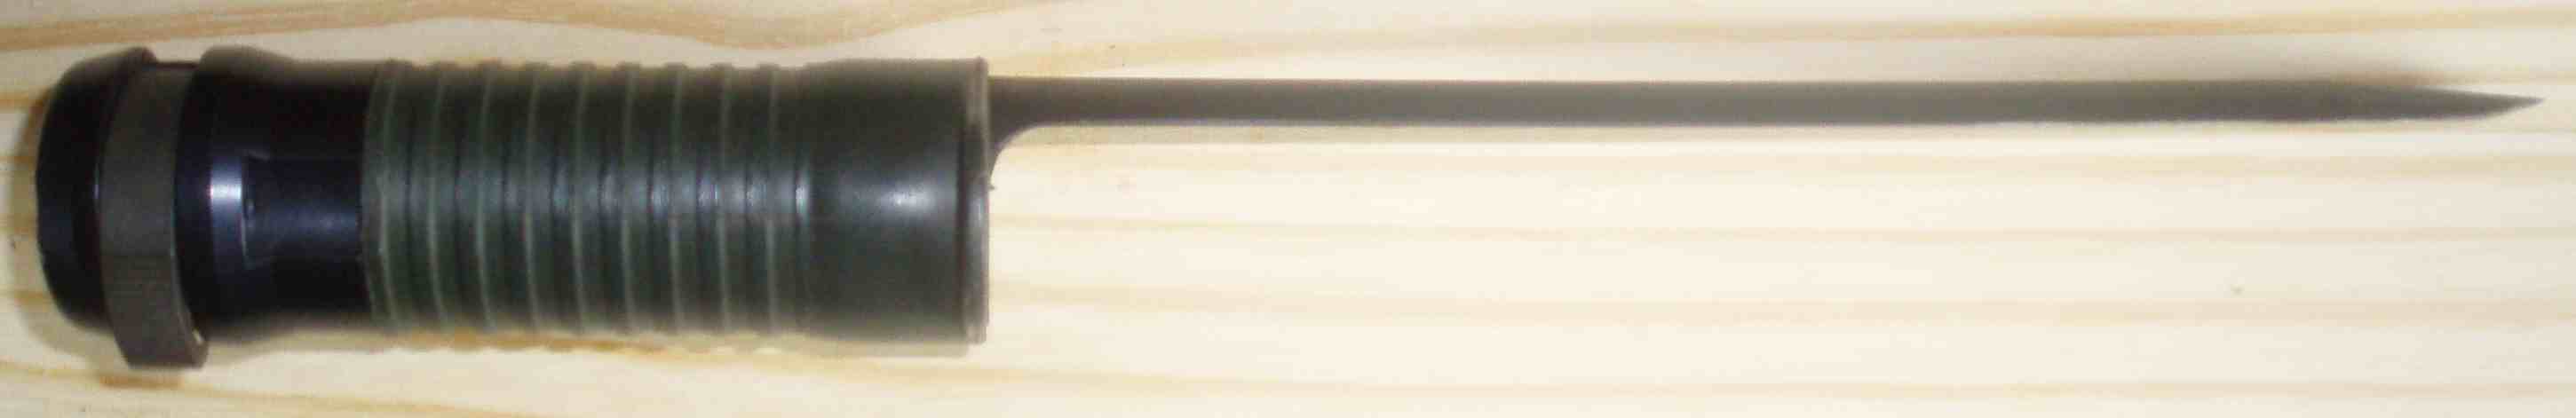 Baonnette poignard SIG 530